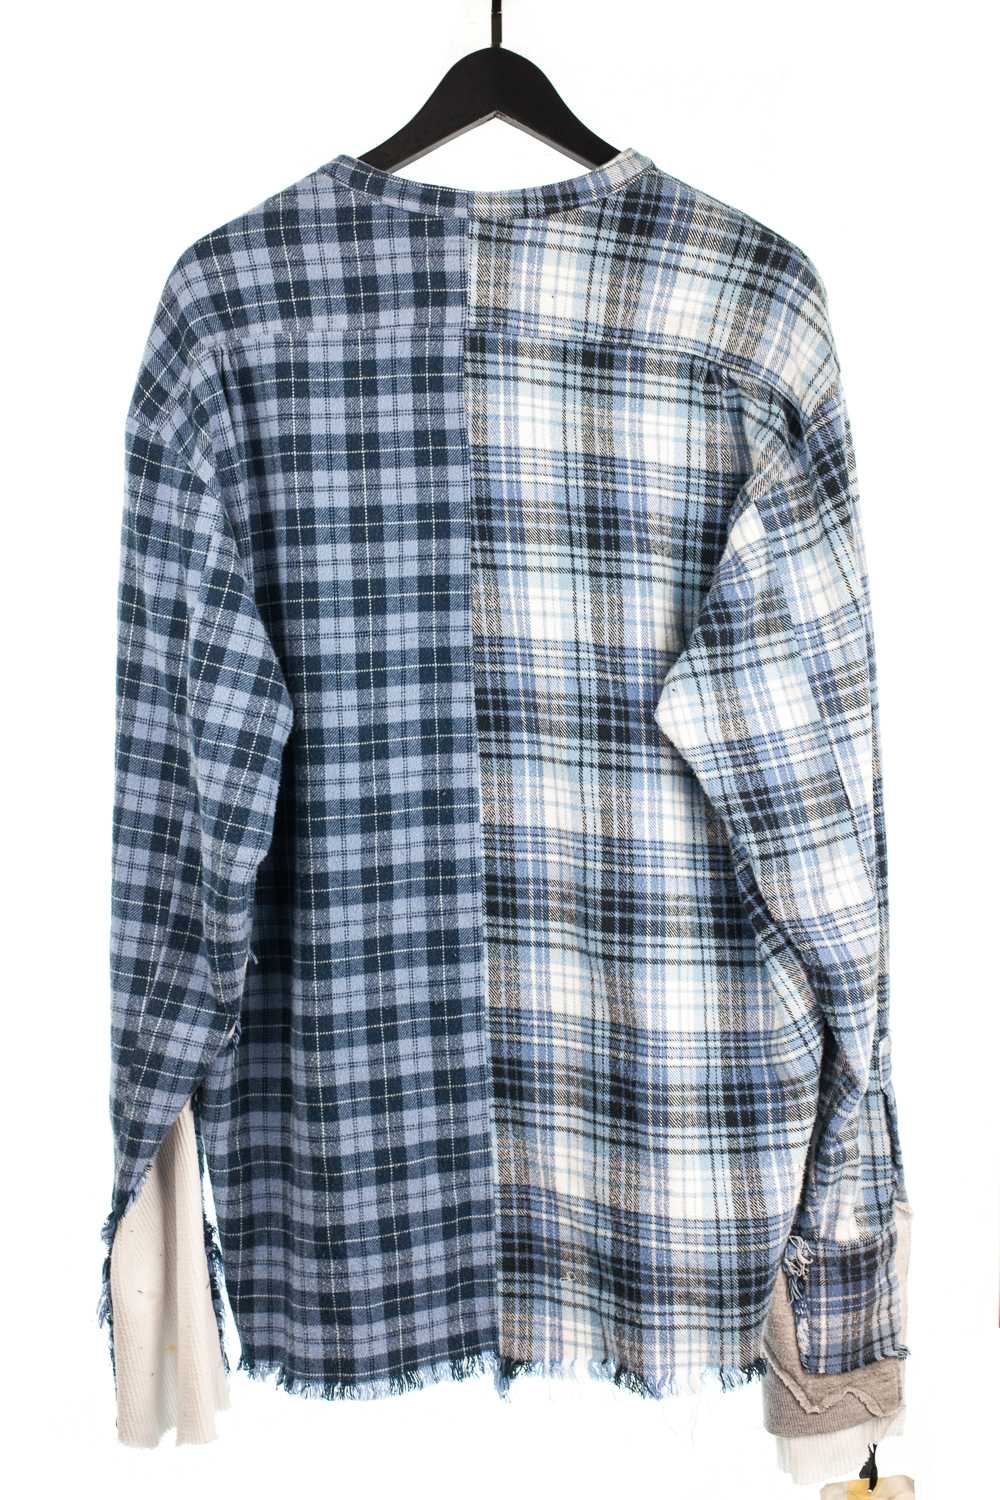 NWT 50/50 Flannel Studio Shirt w/ Pouch Pocket - image 2